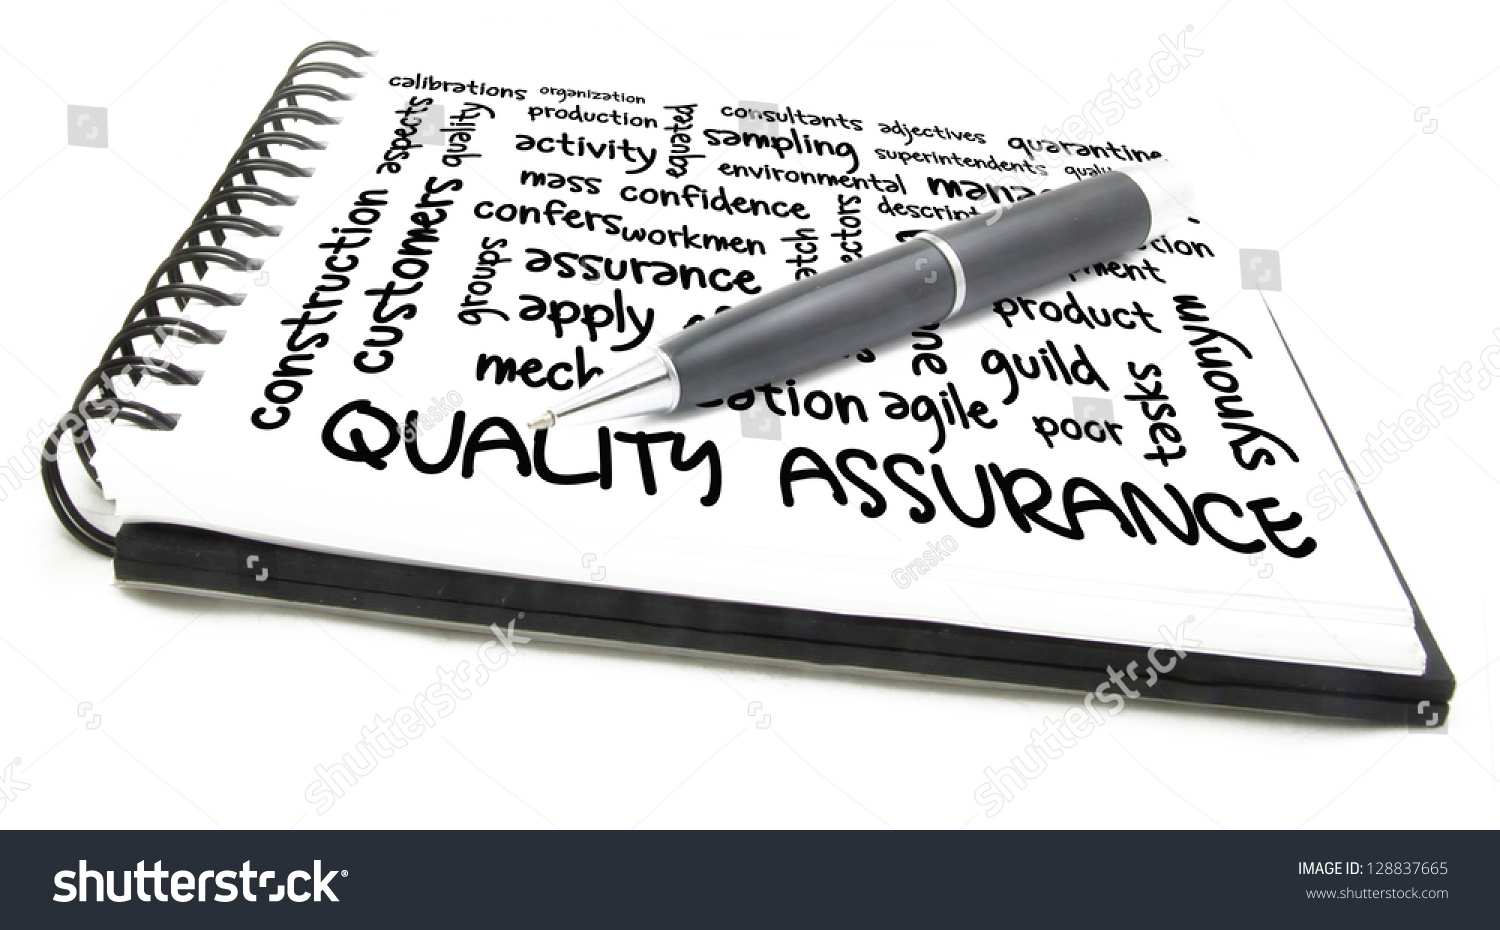 quality assurance clipart images - photo #50